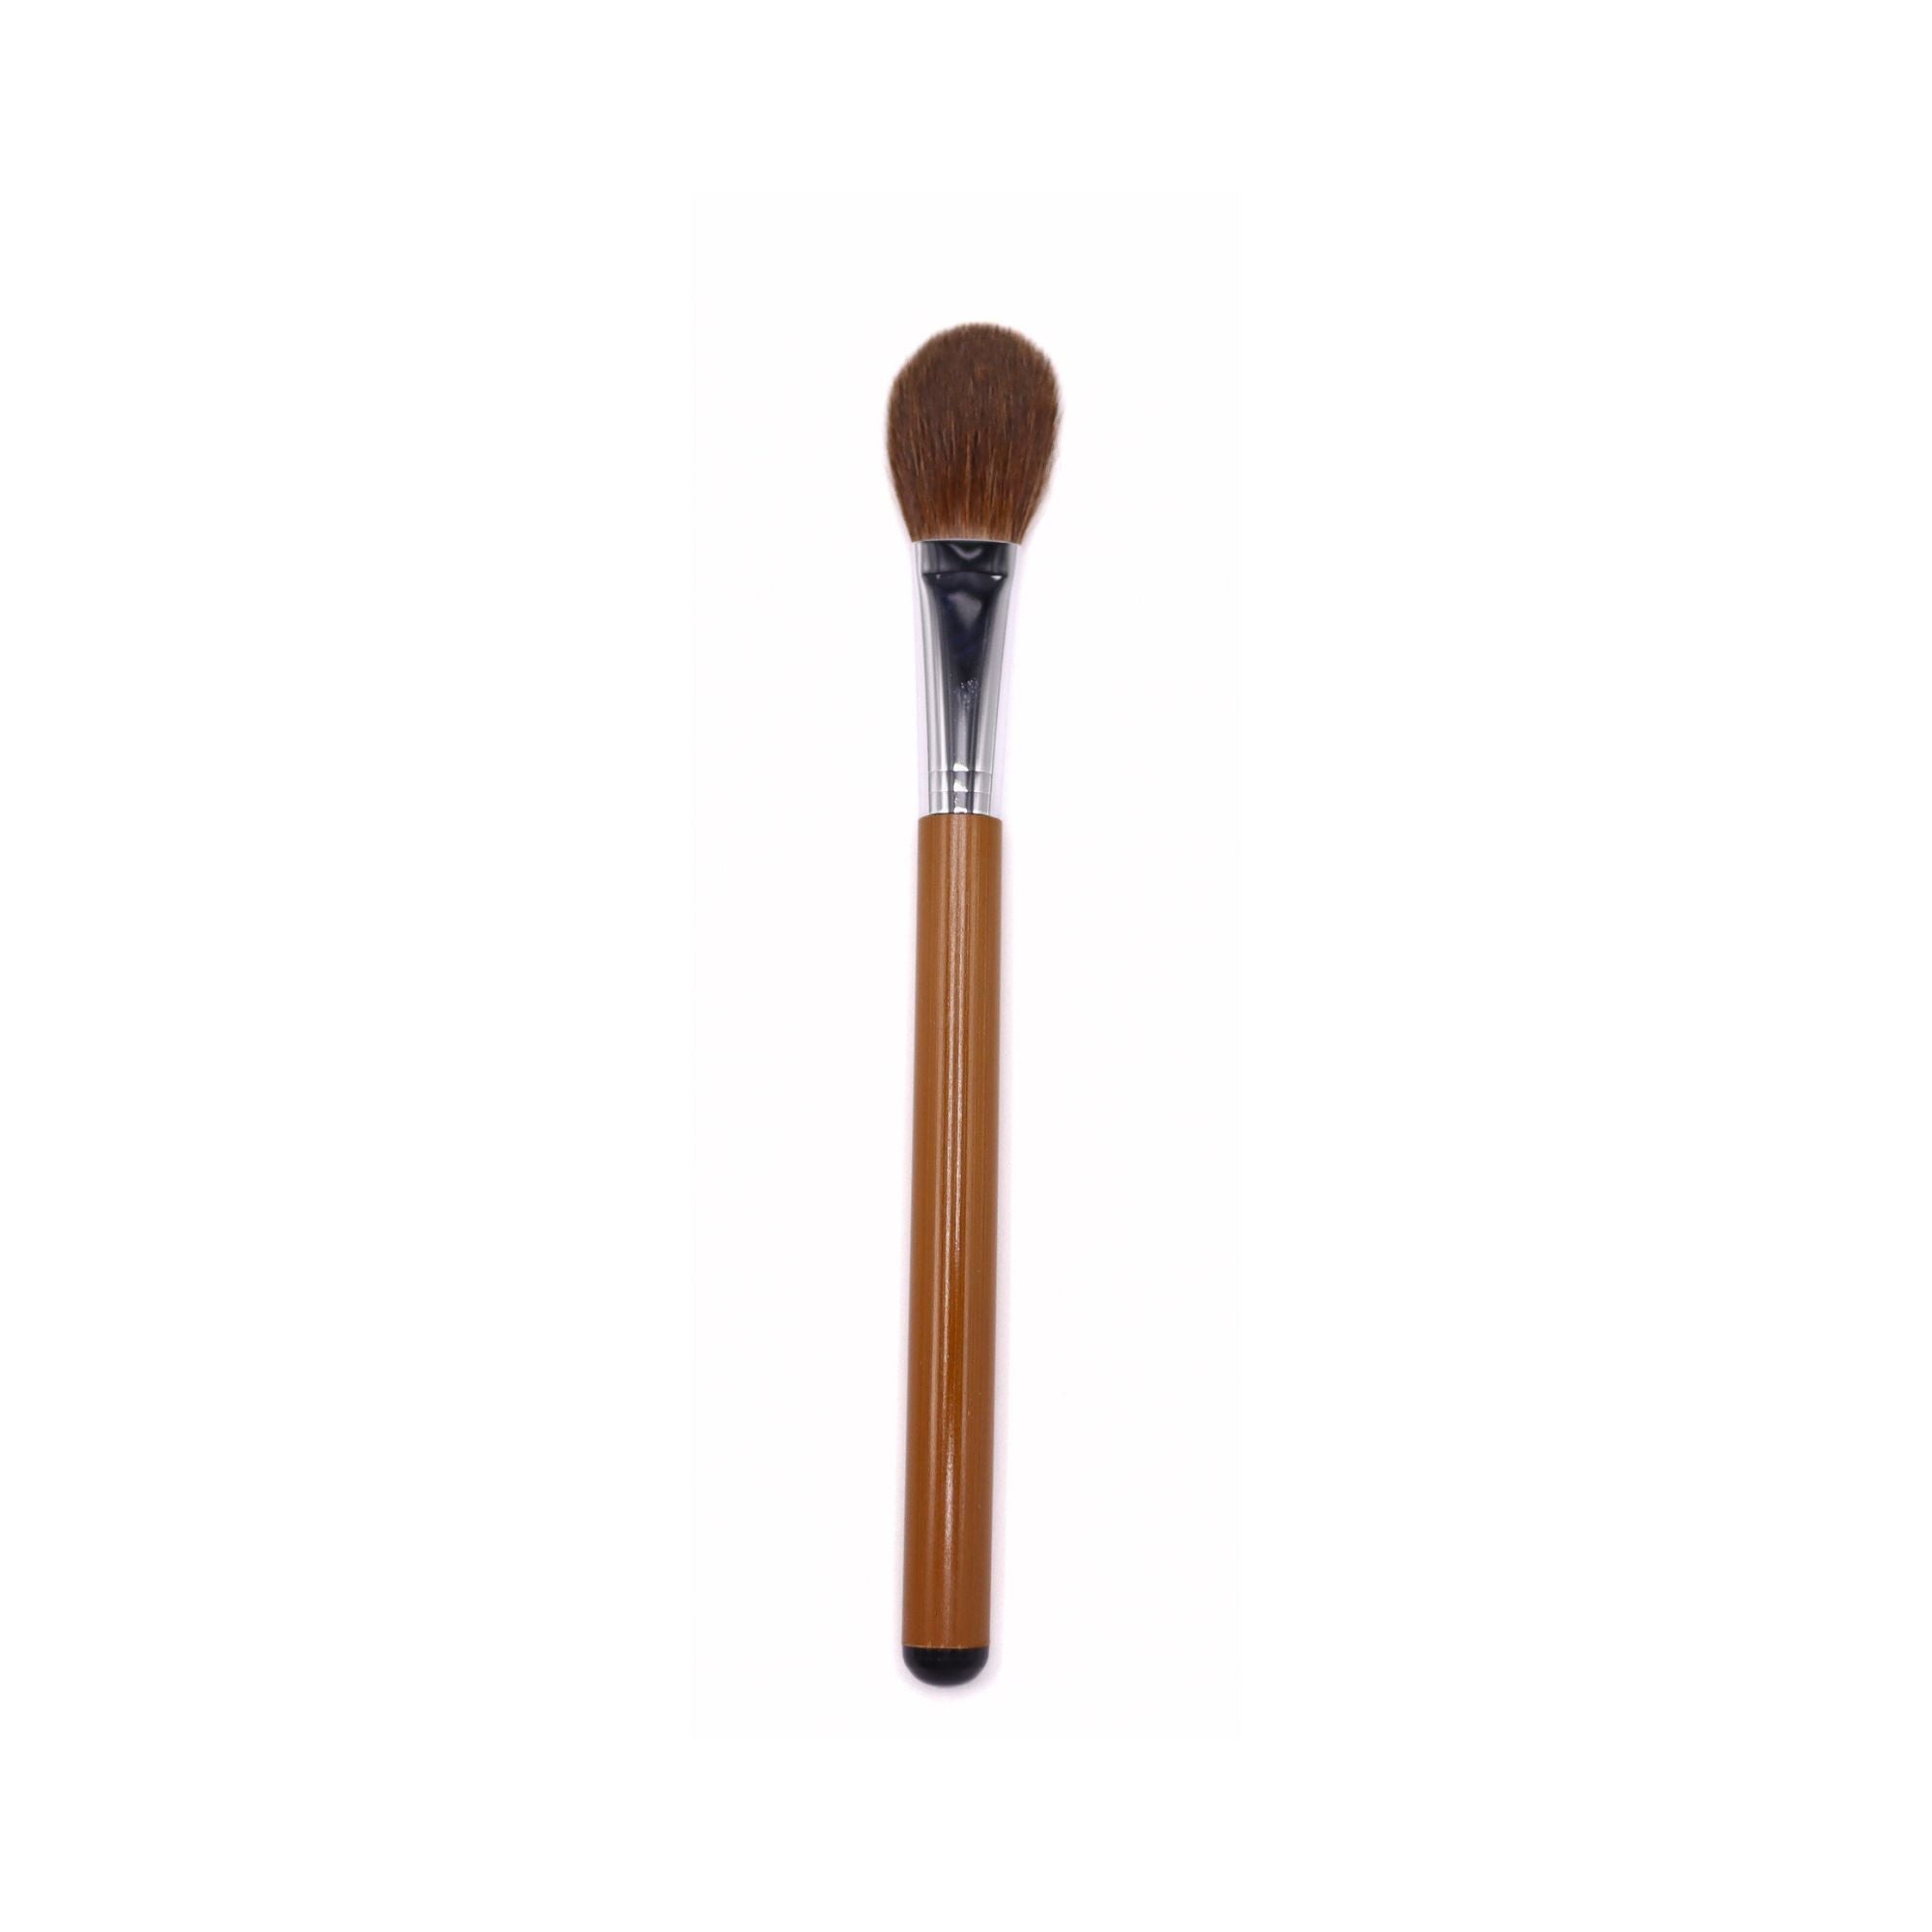 Tanseido Small Cheek Brush, Take 竹 'Bamboo' Series (AQ17TAKE) - Fude Beauty, Japanese Makeup Brushes